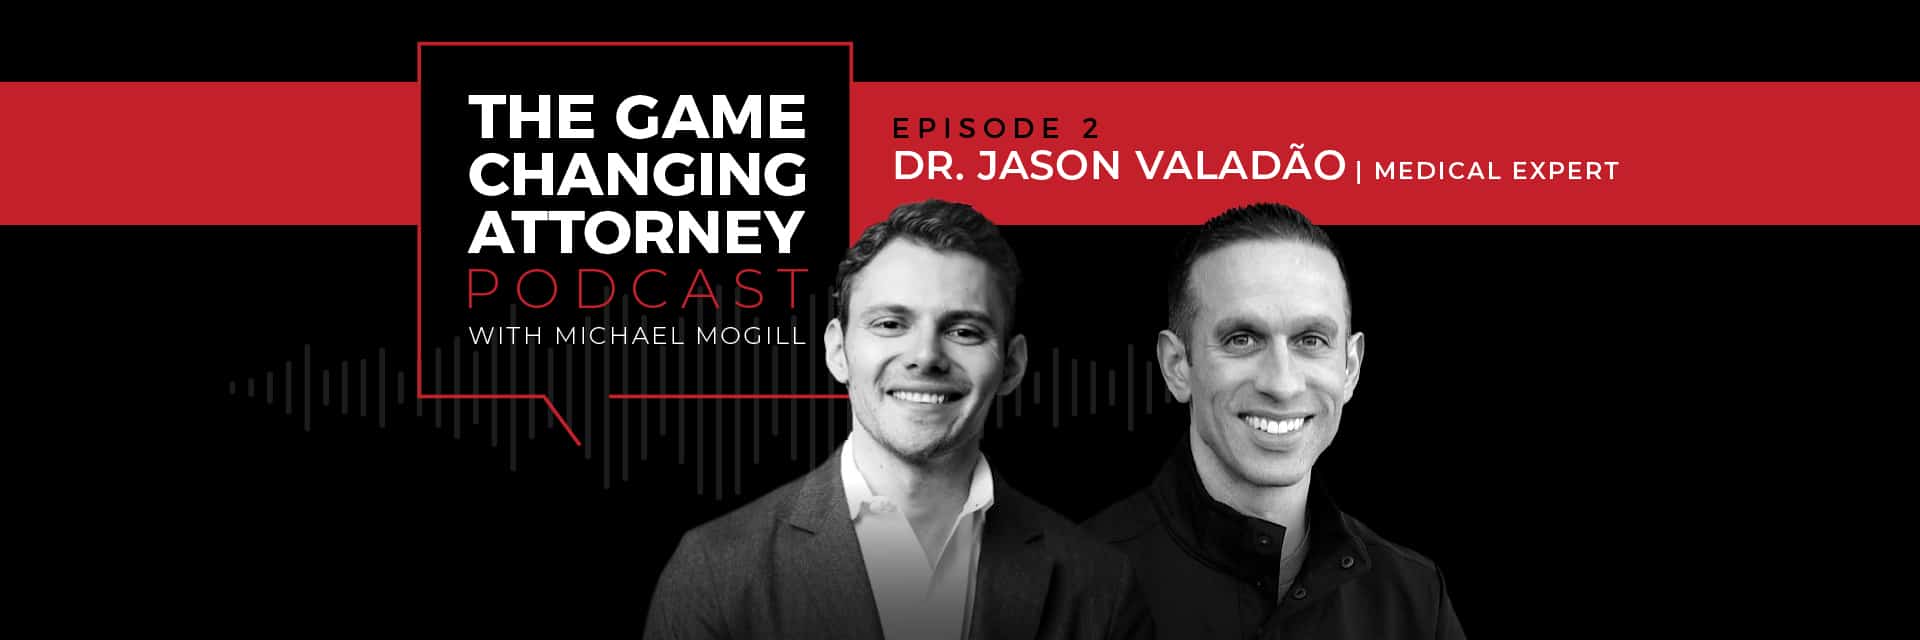 Dr. Jason Valadão - The Game Changing Attorney Podcast header1